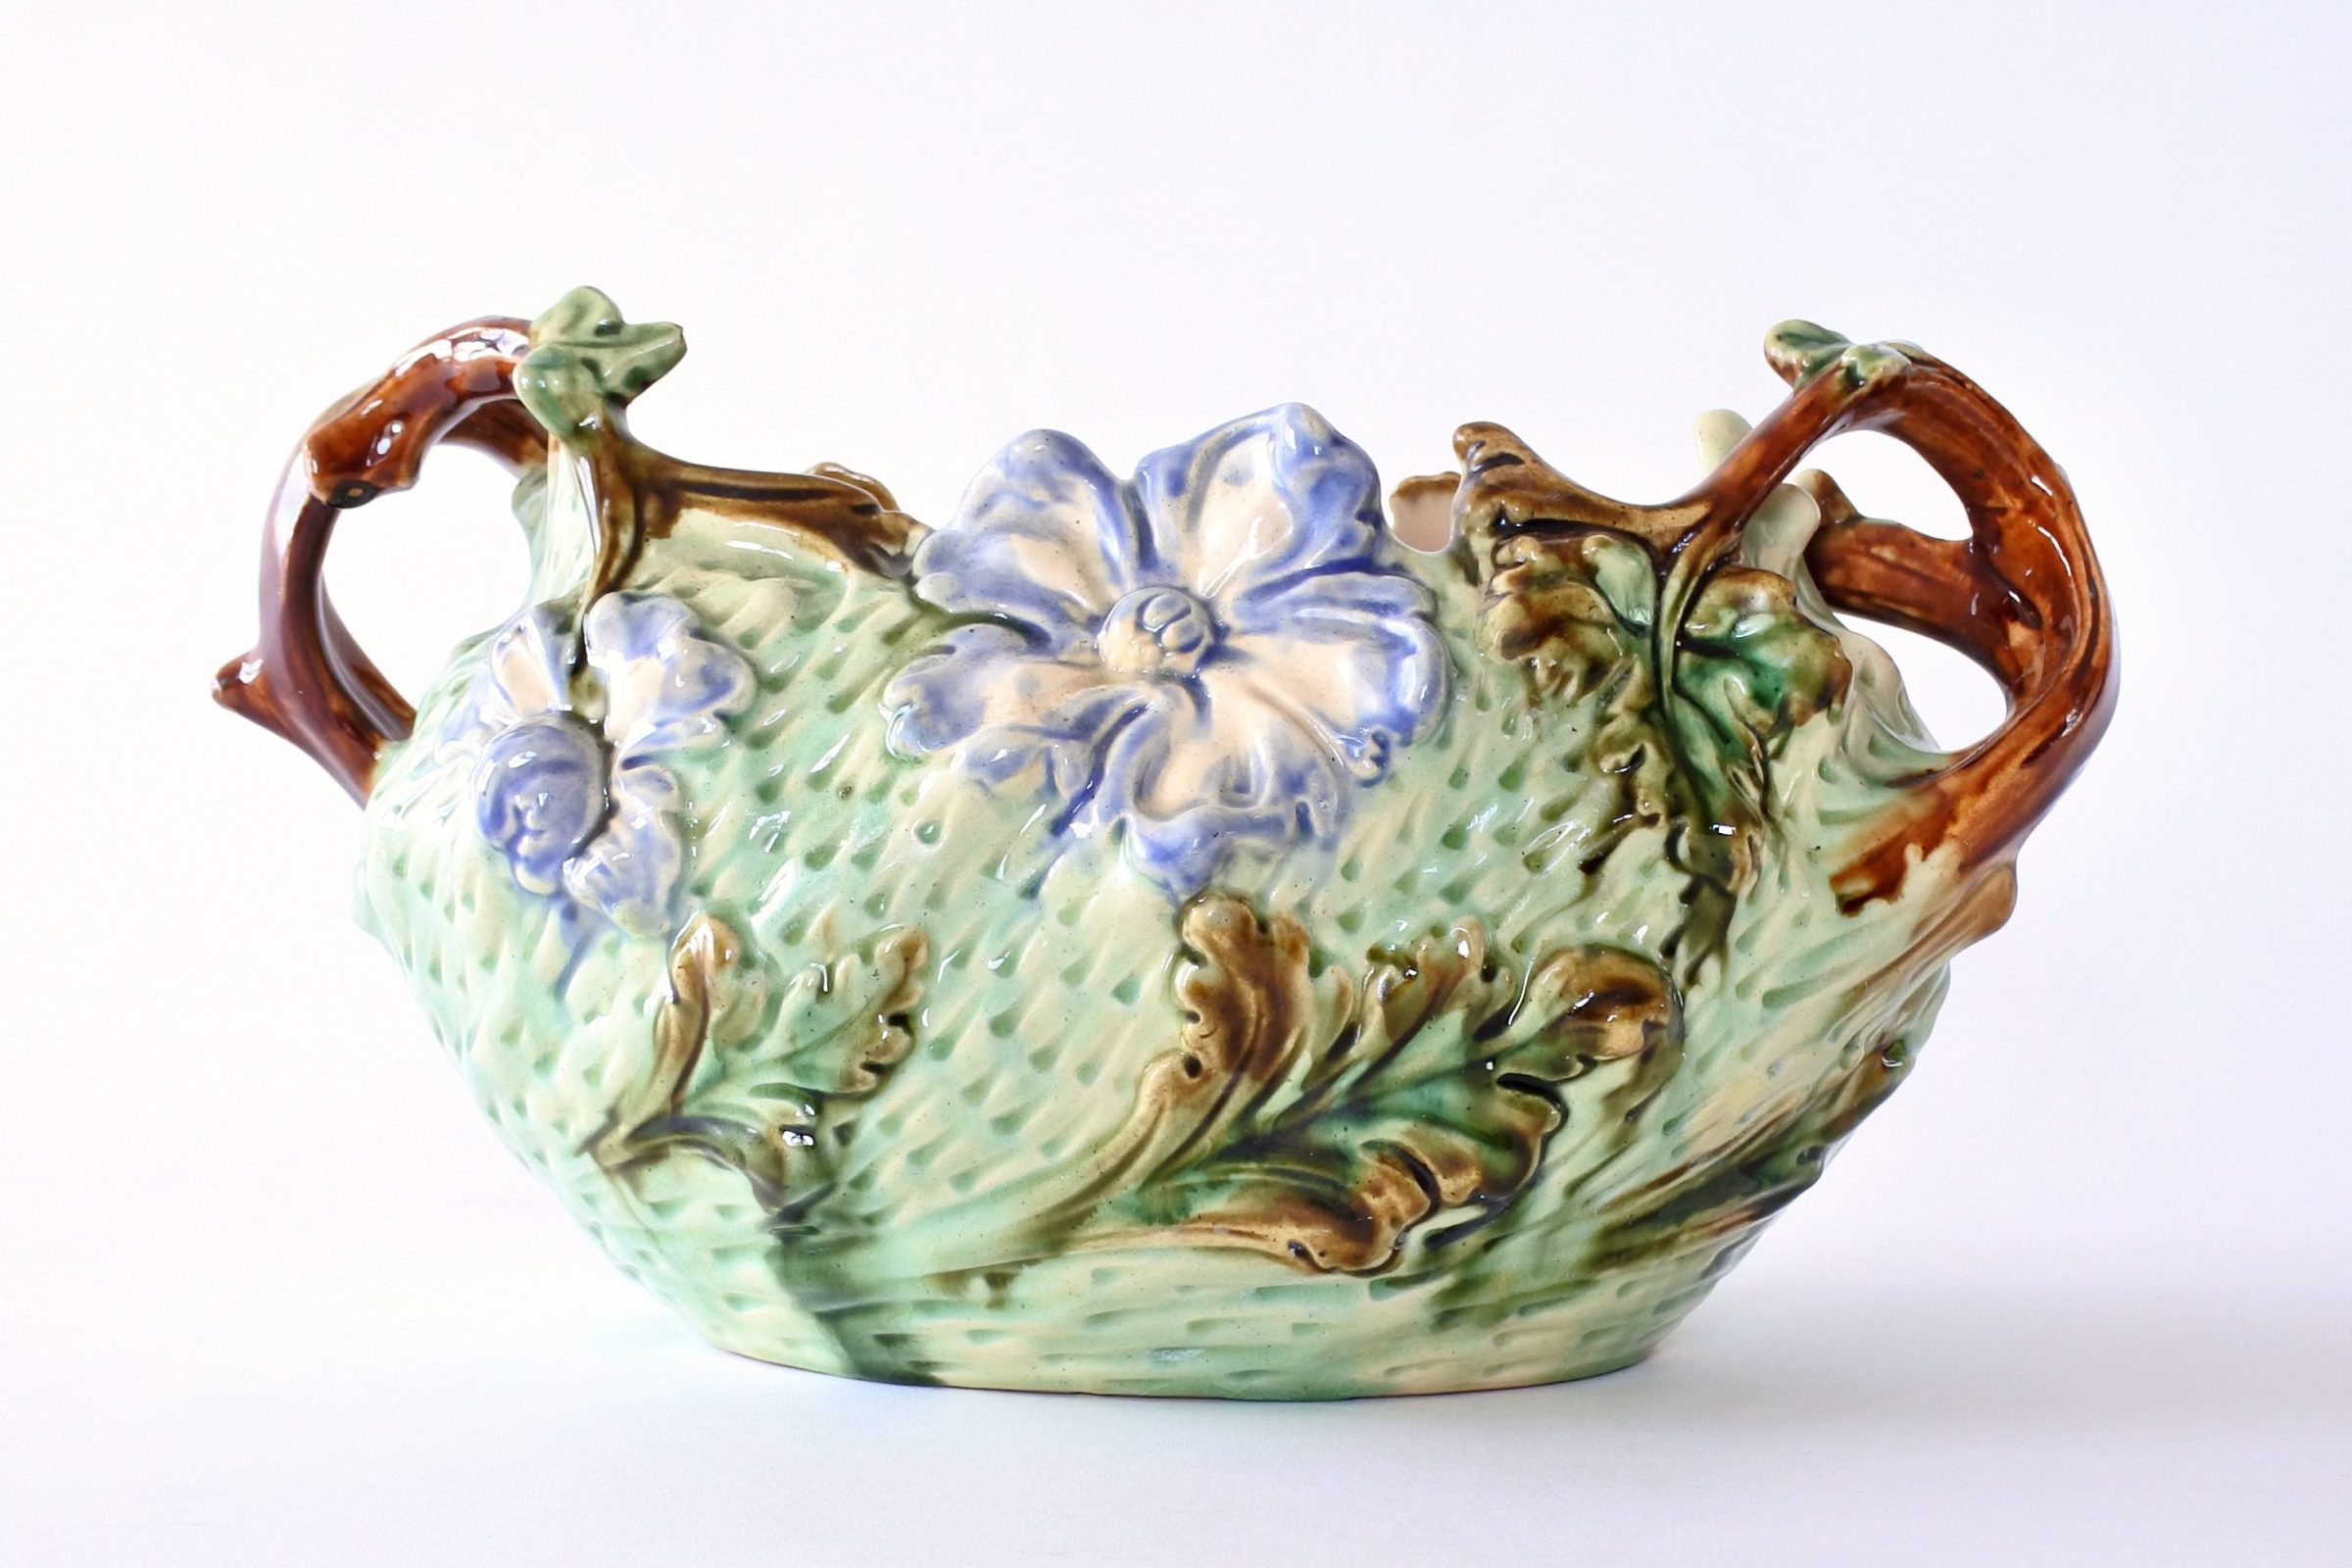 Jardinière in ceramica barbotine con fiori blu su fondo turchese